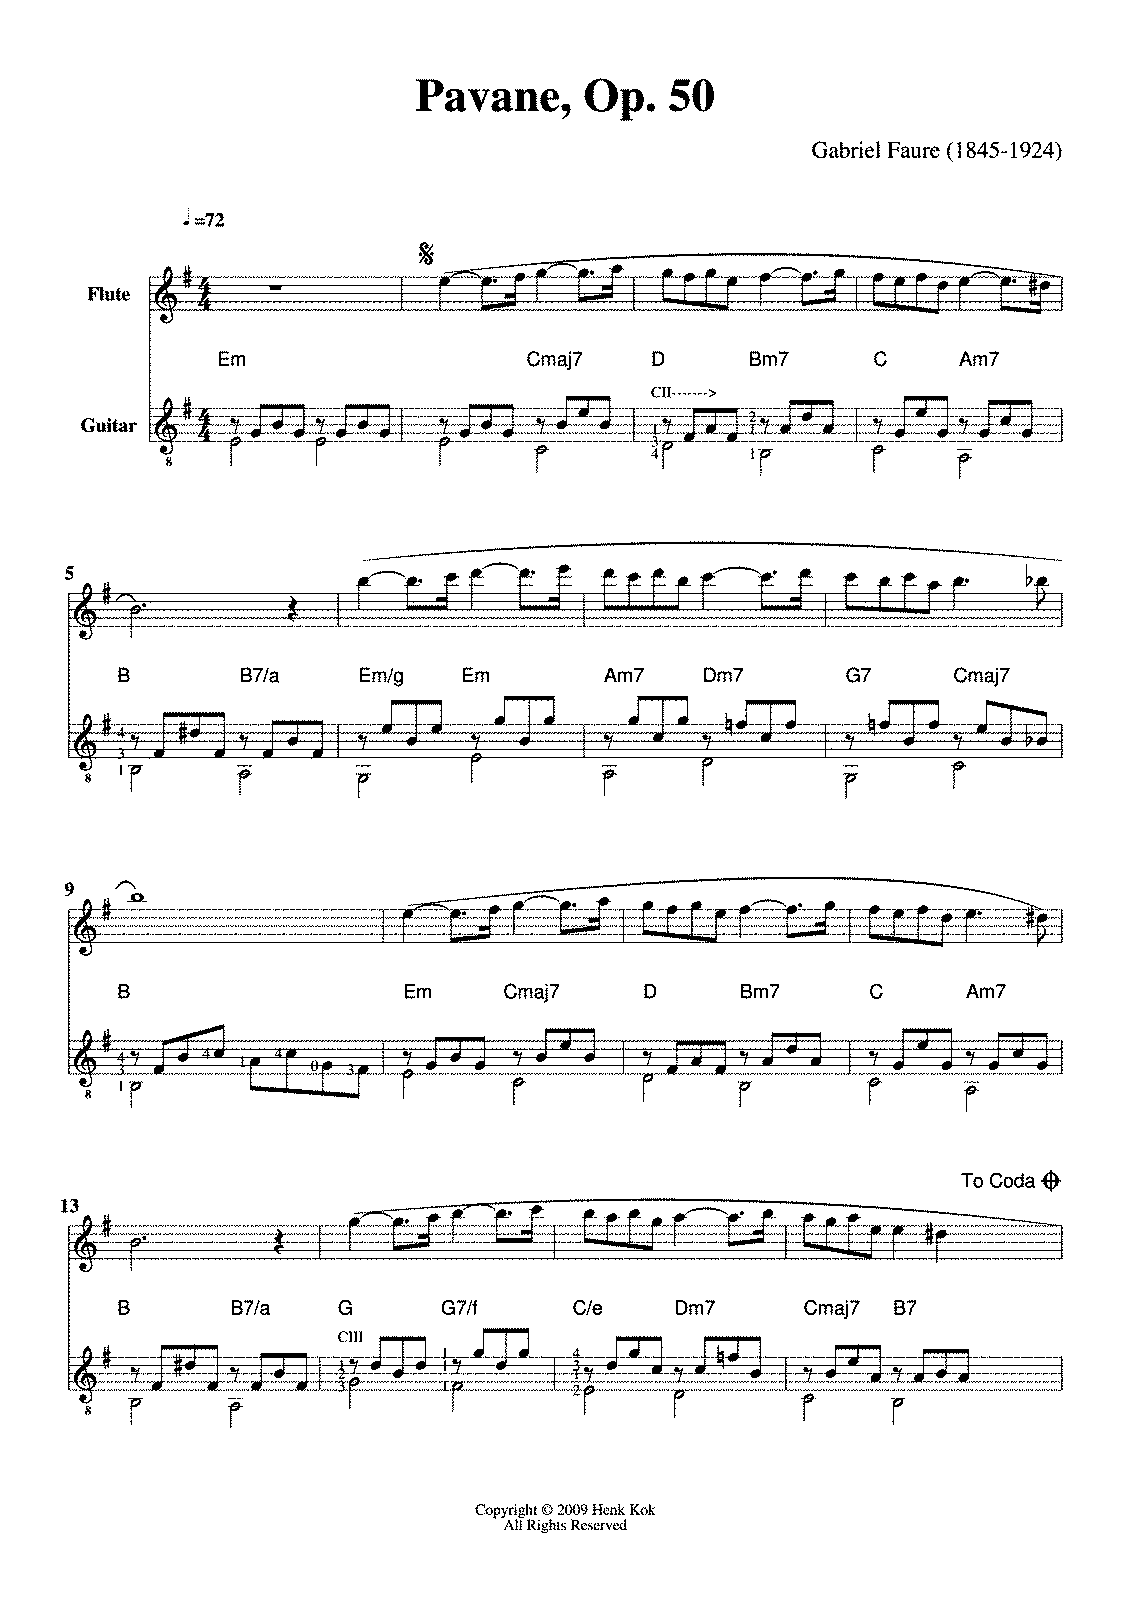 Pavane, Op.50 (Fauré, Gabriel) - IMSLP: Free Sheet Music PDF Download